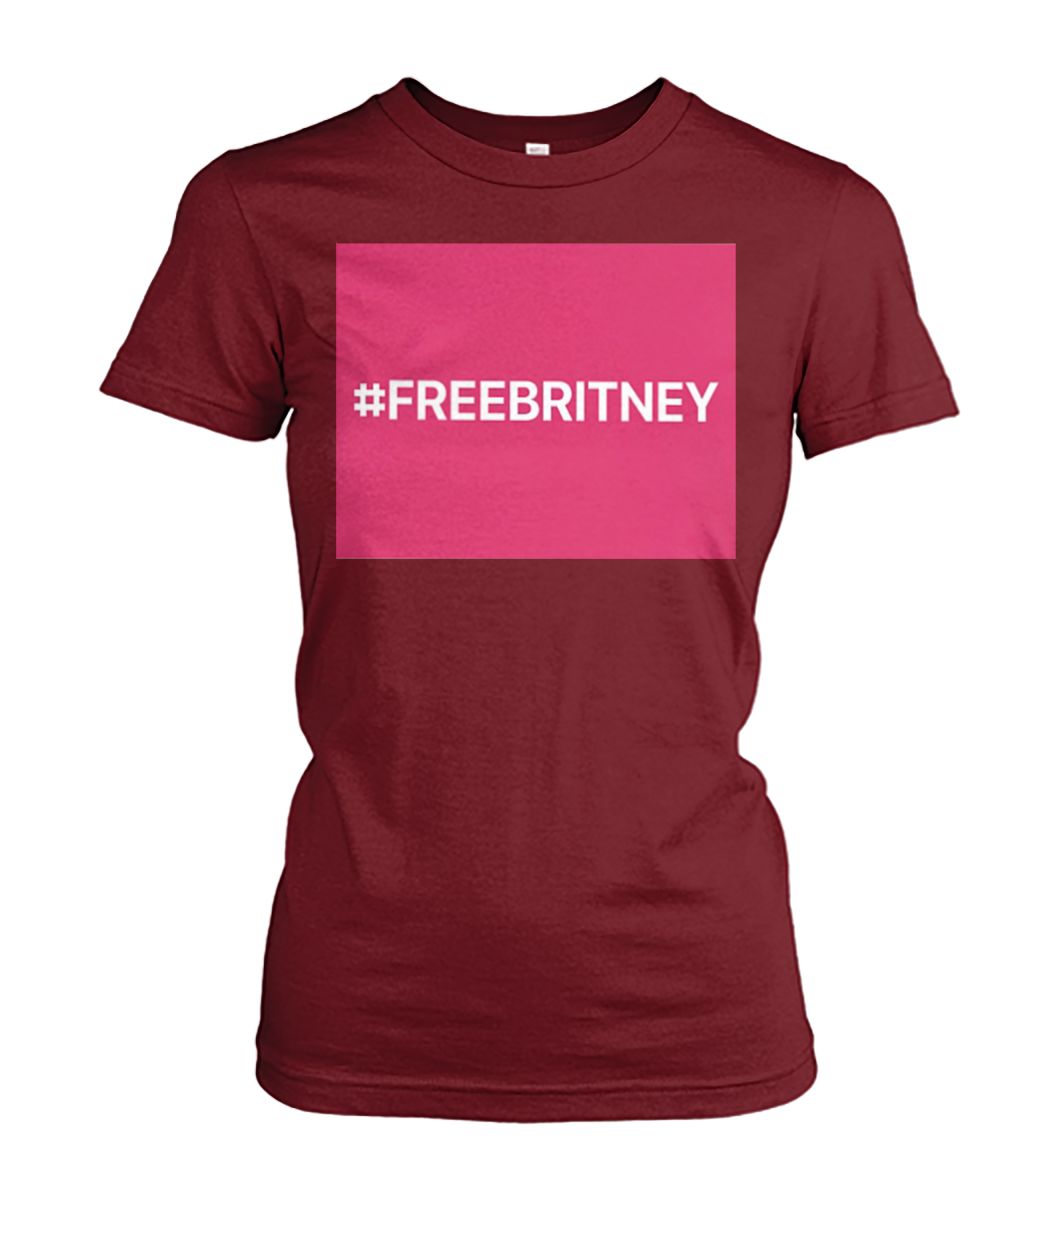 Free britney #freebritney women's crew tee